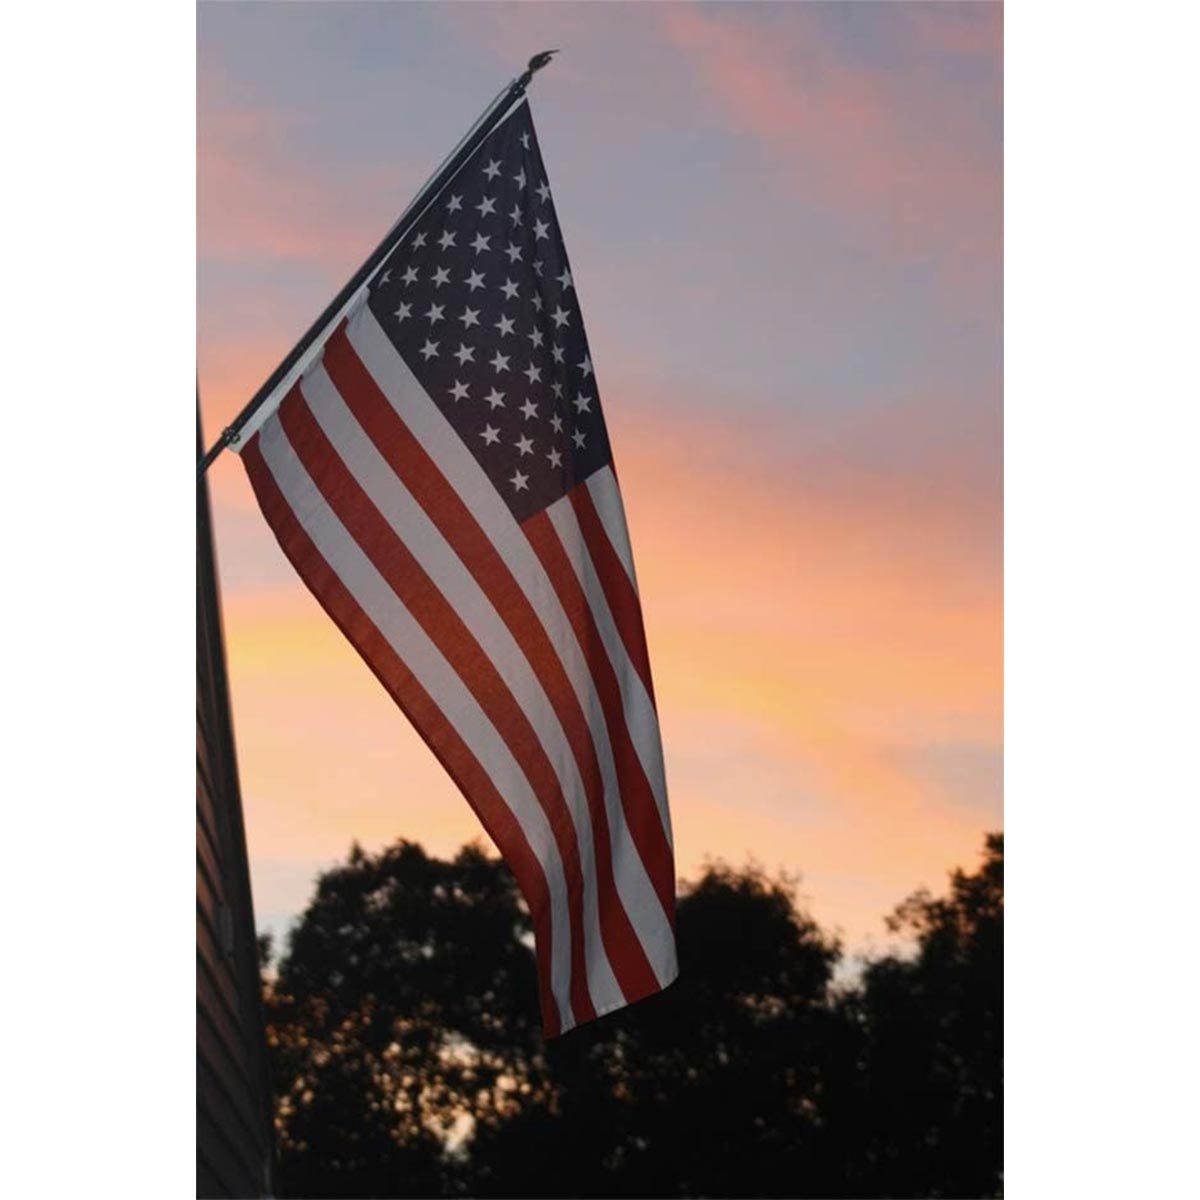 19 Glorious American Flag Photos Guaranteed To Make You Feel Patriotic Courtesy Kelli Druckemiller A